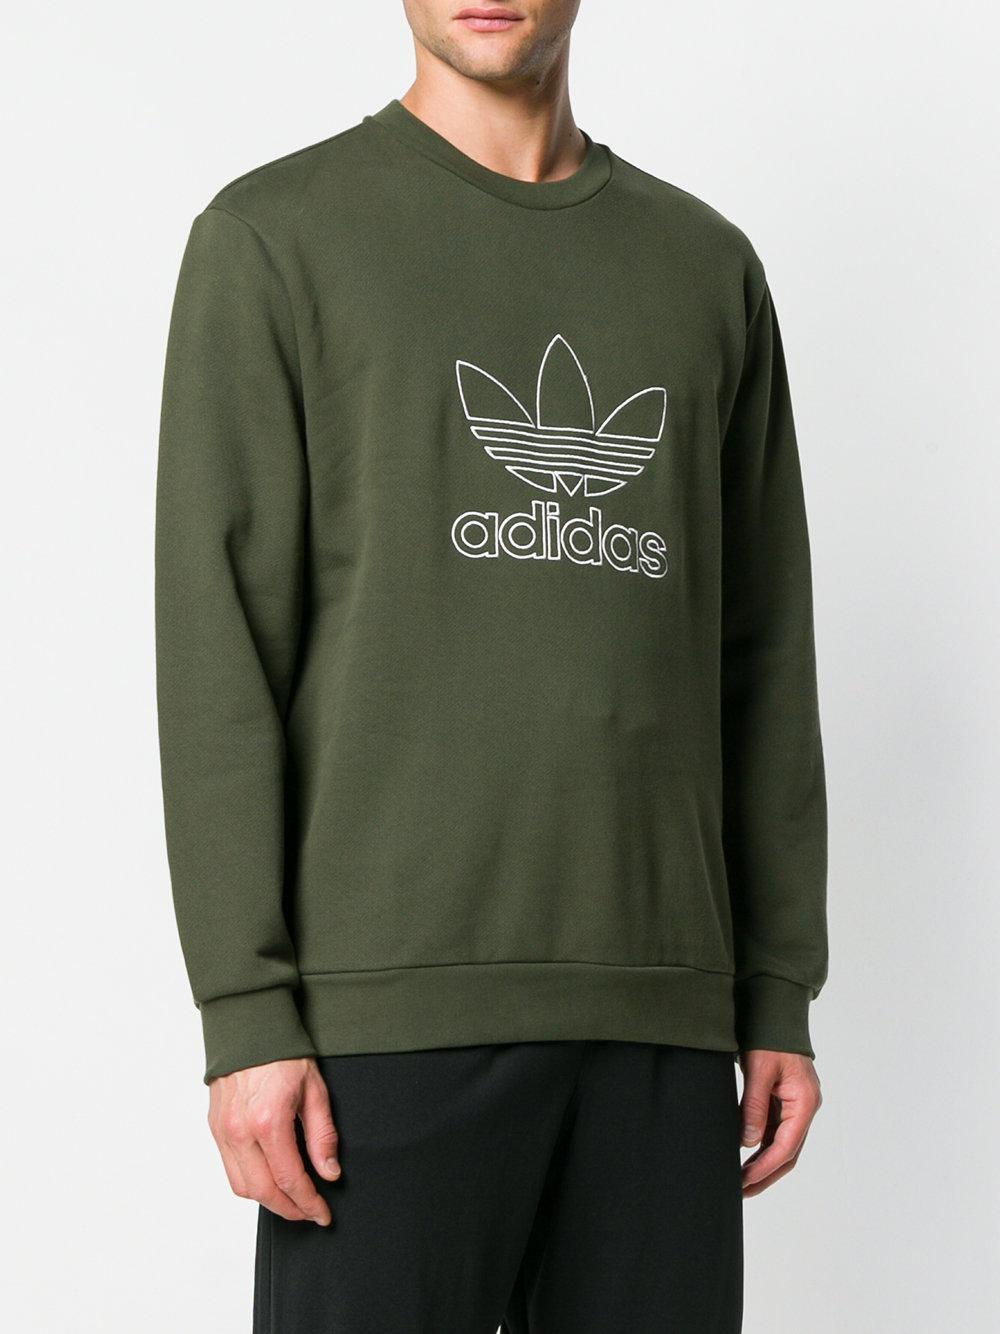 adidas Cotton Outline Crewneck Sweatshirt in Green for Men - Lyst